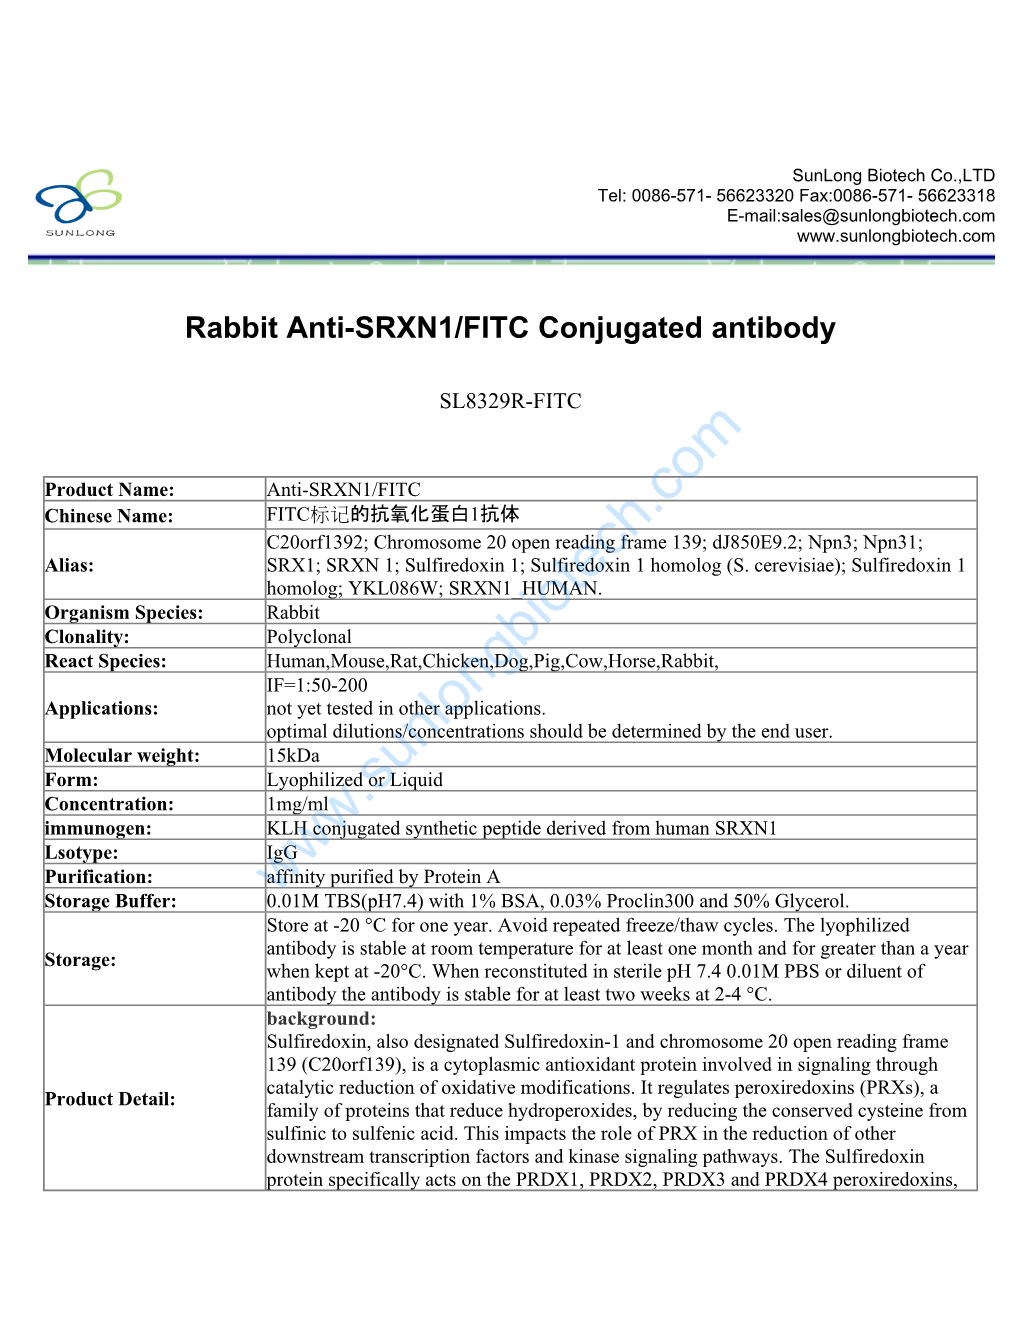 Rabbit Anti-SRXN1/FITC Conjugated Antibody